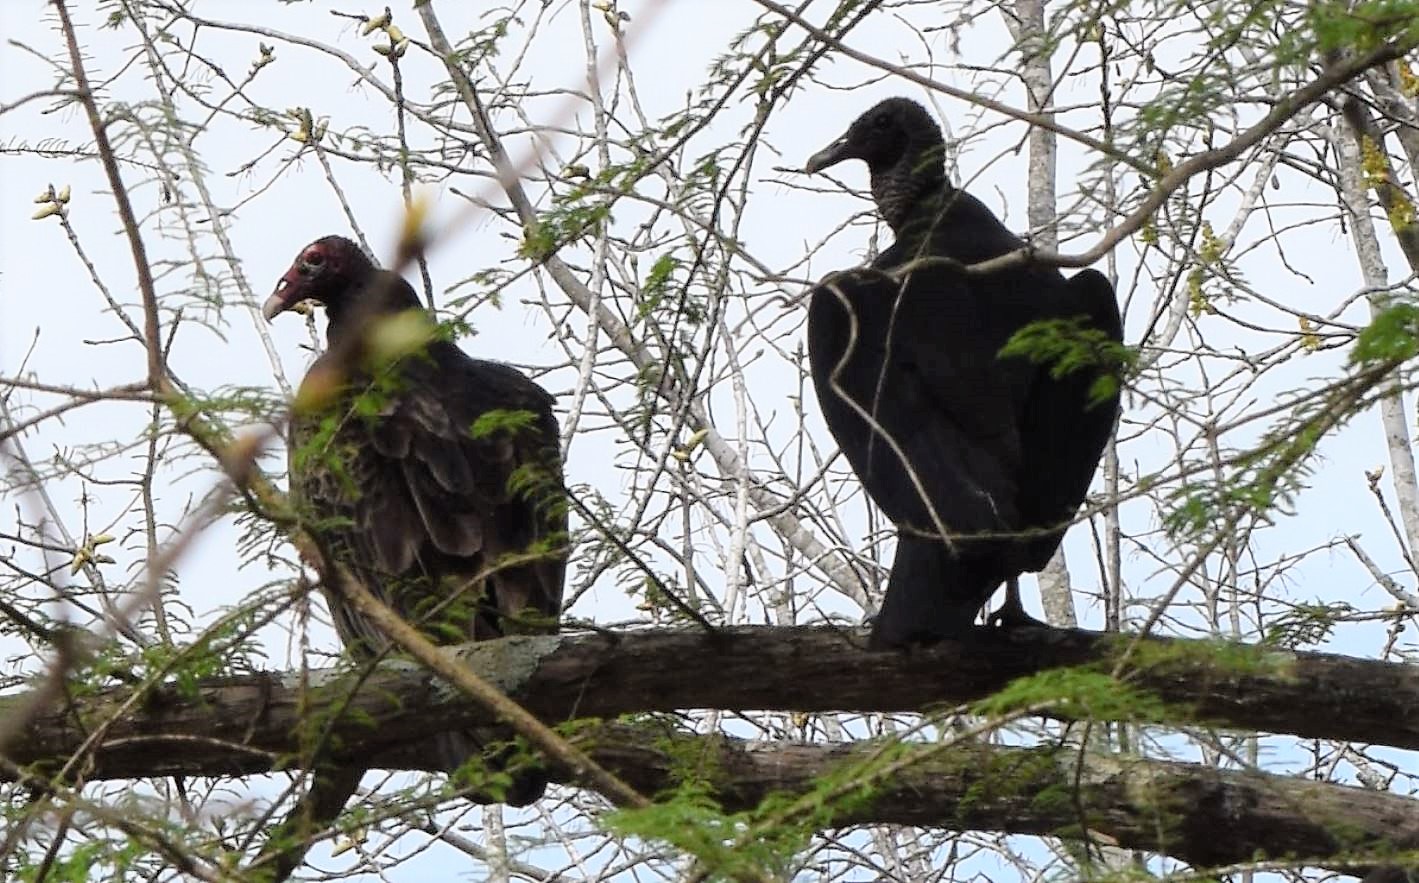 Turkey vulture and black vulture